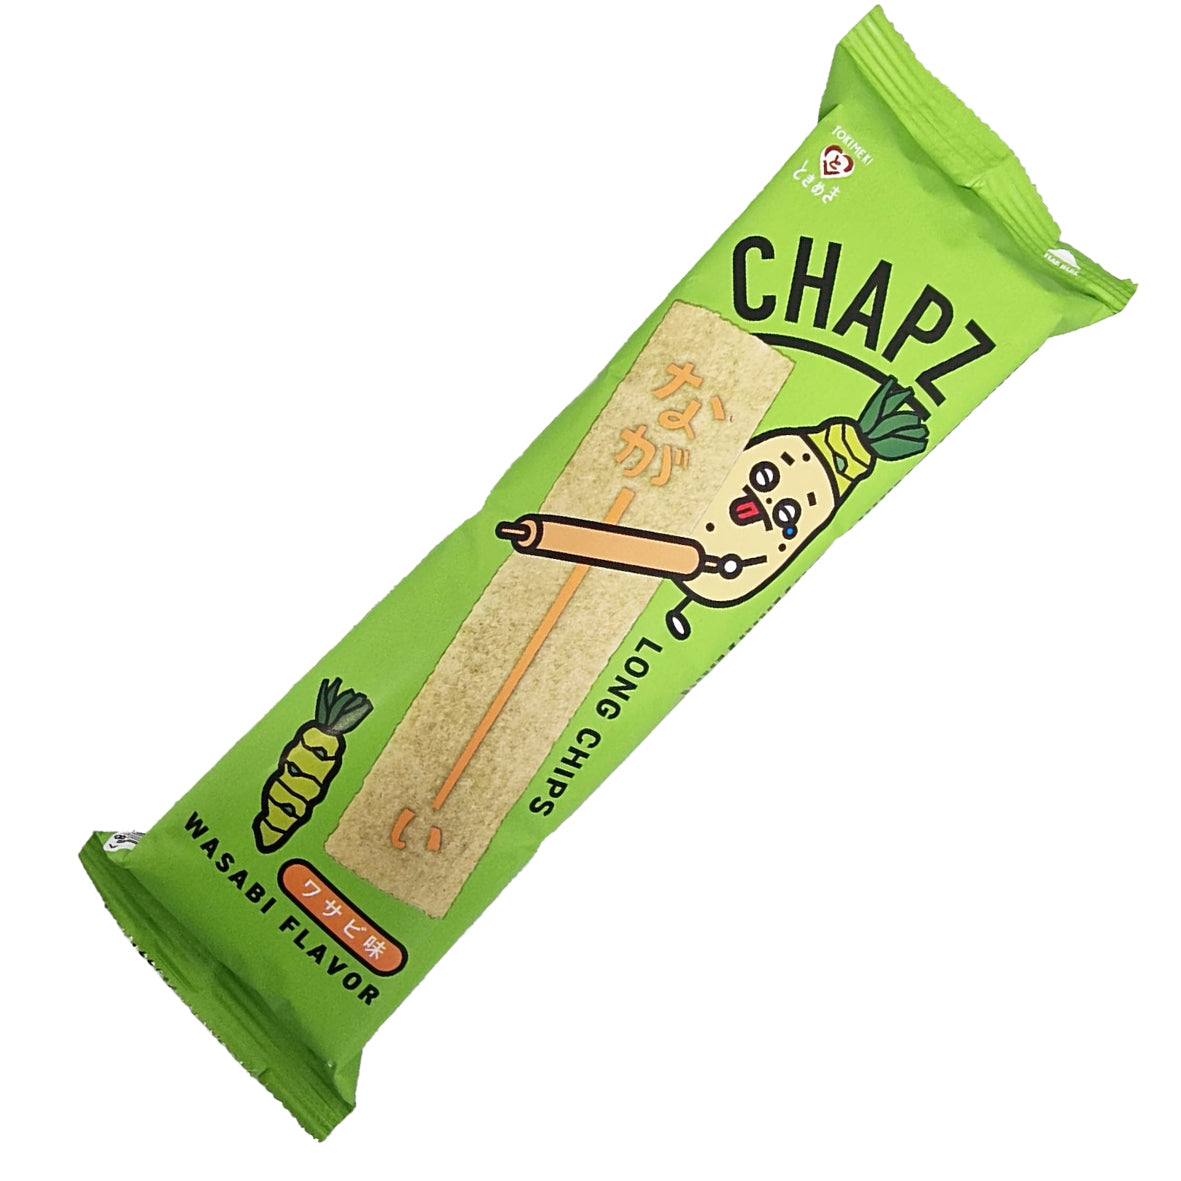 Chapz Long chips - Wasabi Flavor